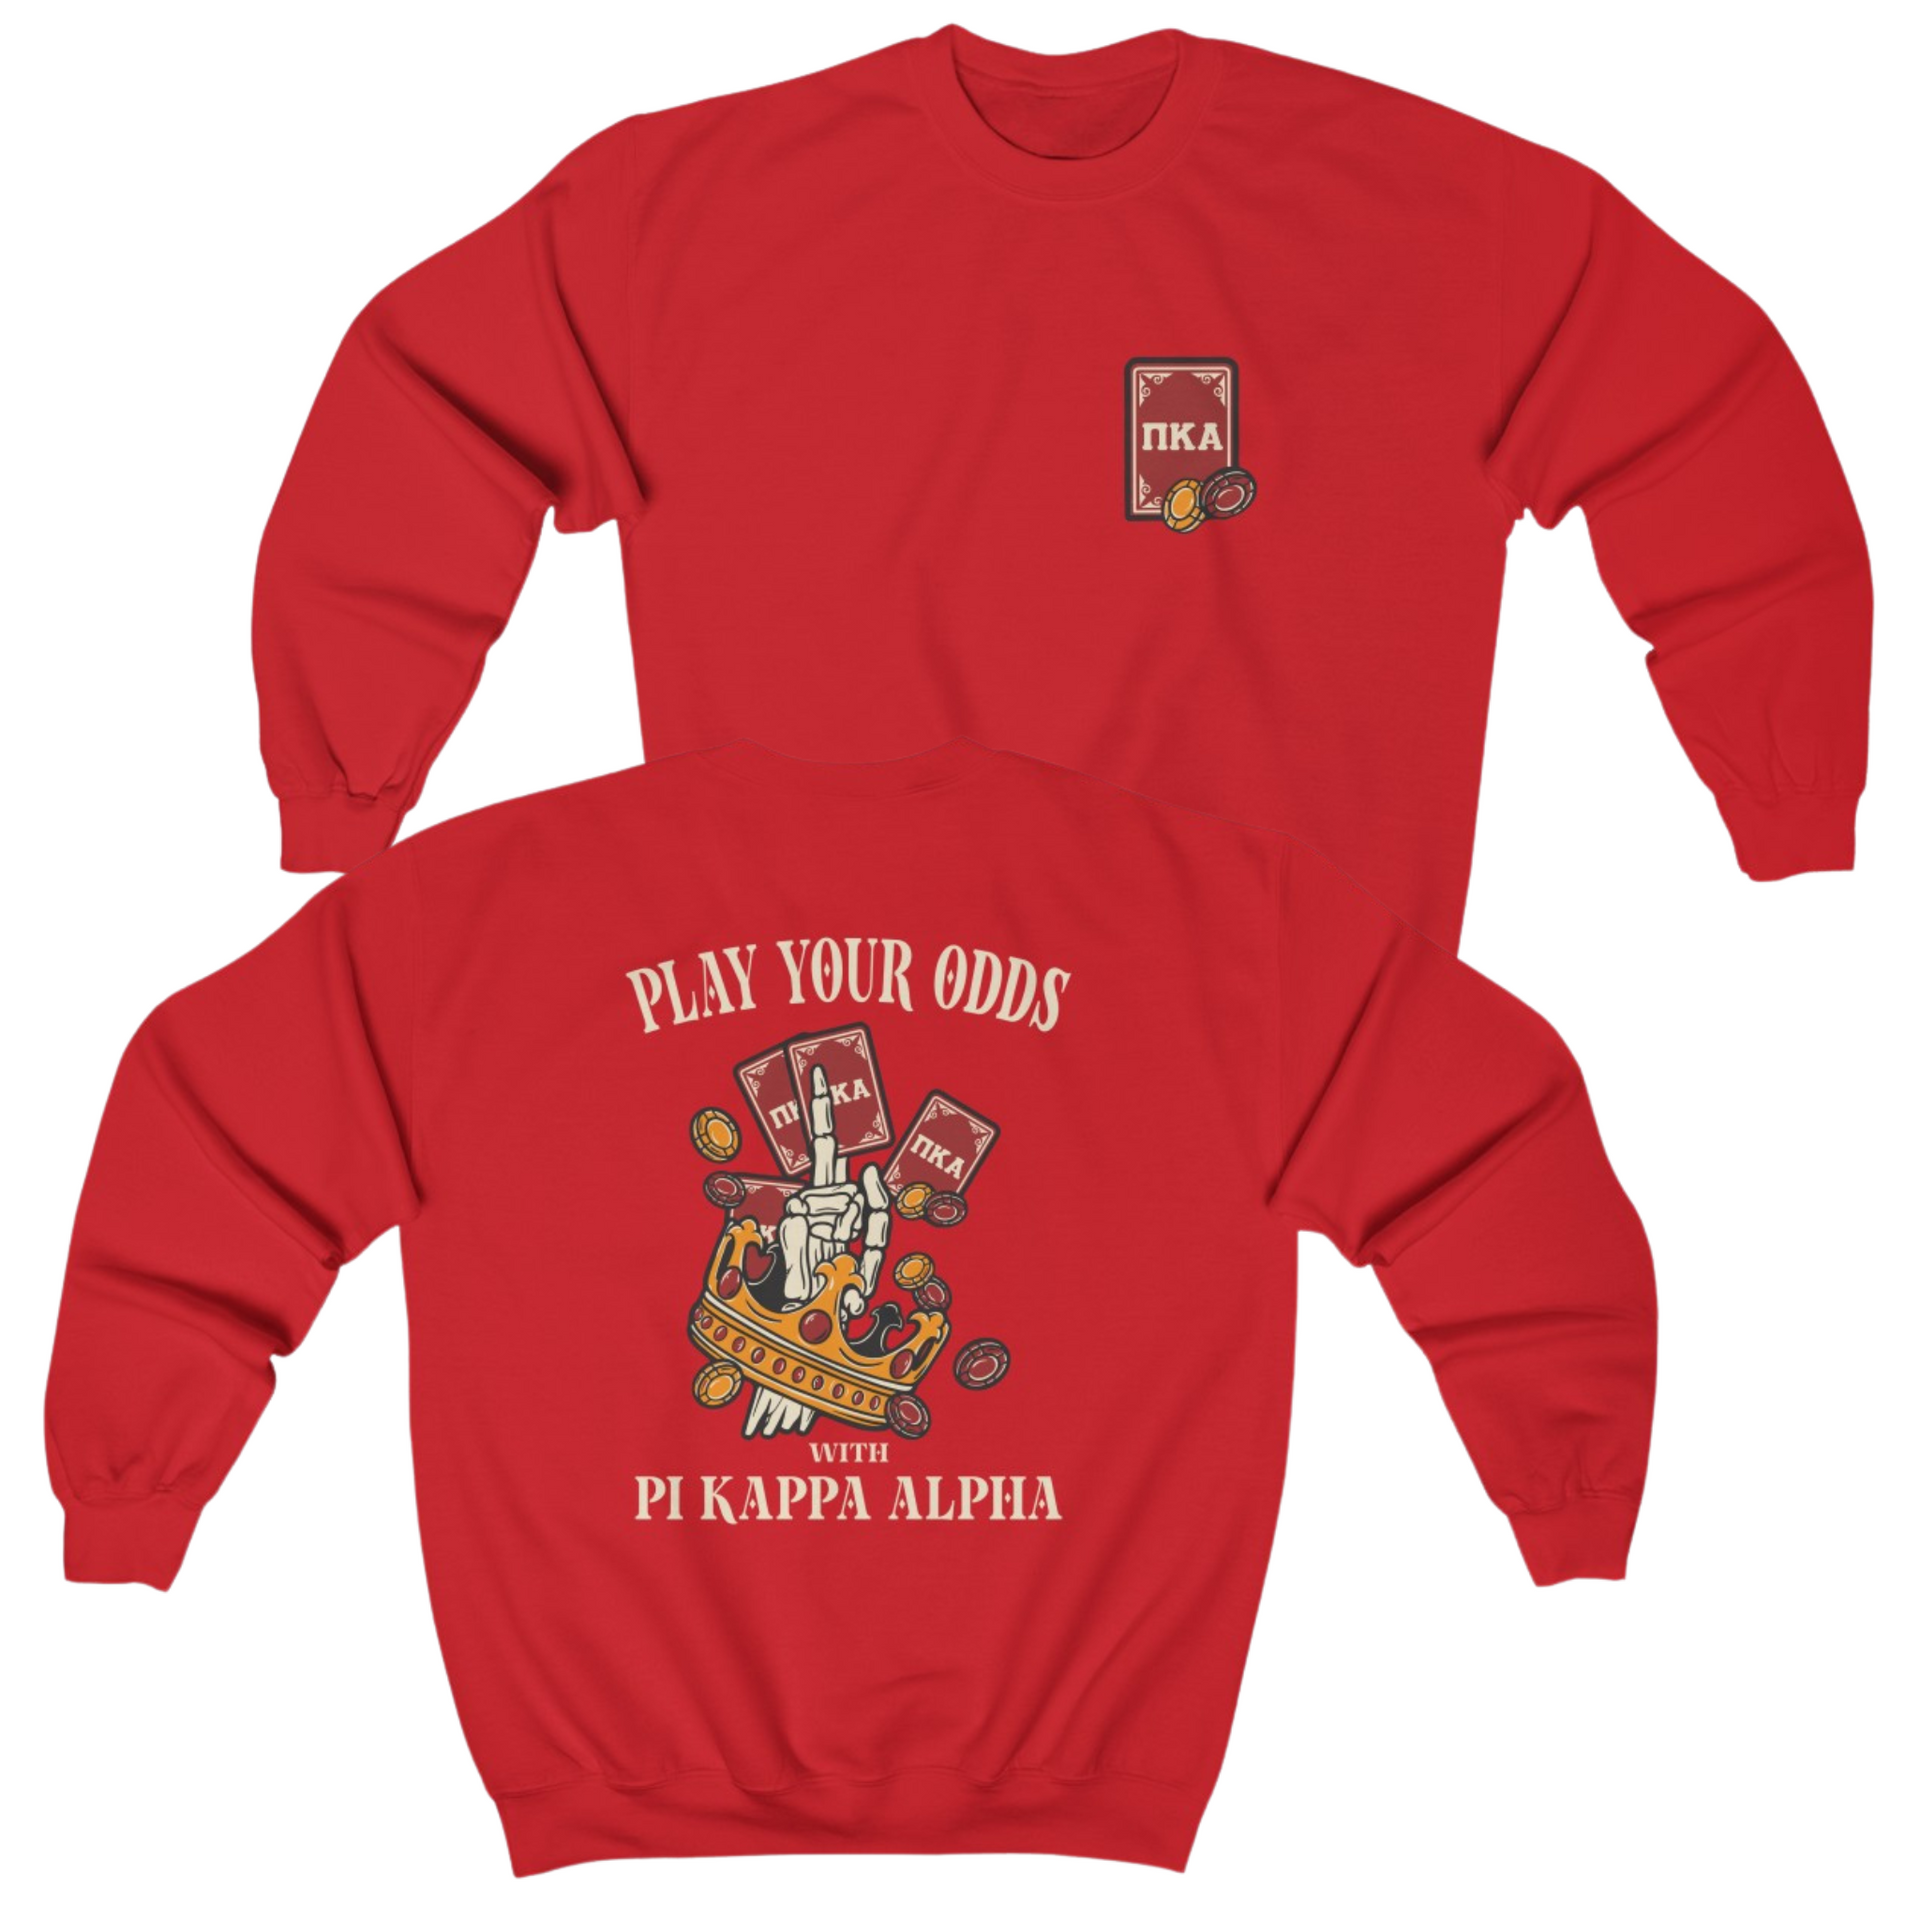 Red Pi Kappa Alpha Graphic Crewneck Sweatshirt | Play Your Odds | Pi kappa alpha fraternity shirt 